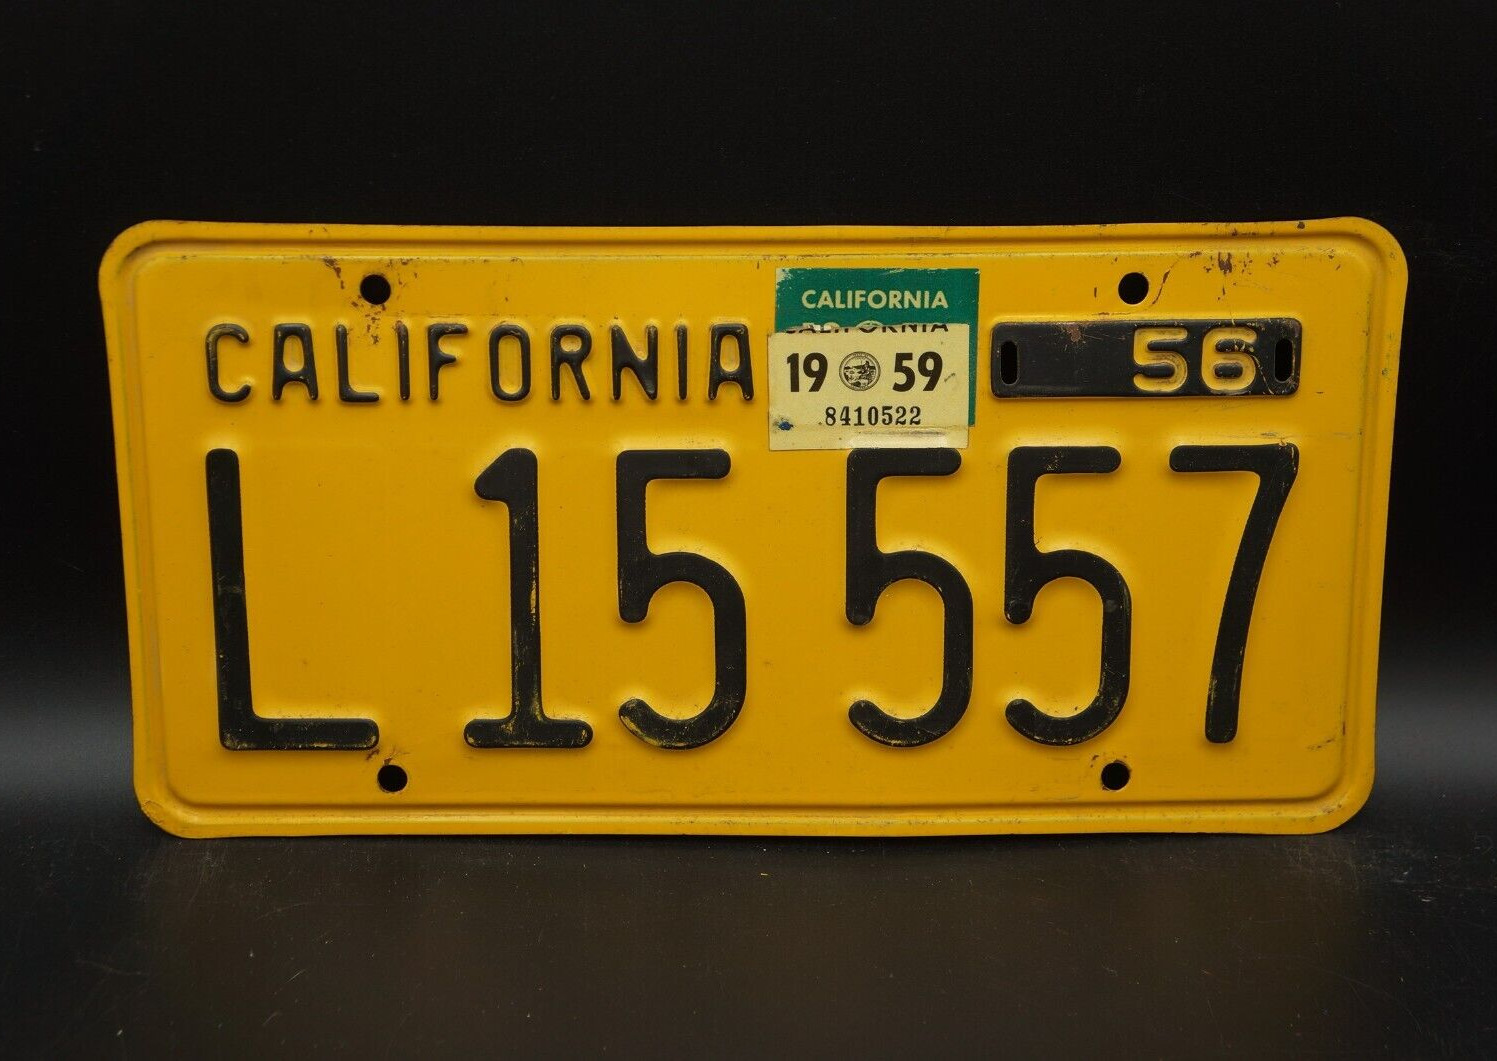 1958 1959 CALIFORNIA License Plate - NICE QUALITY